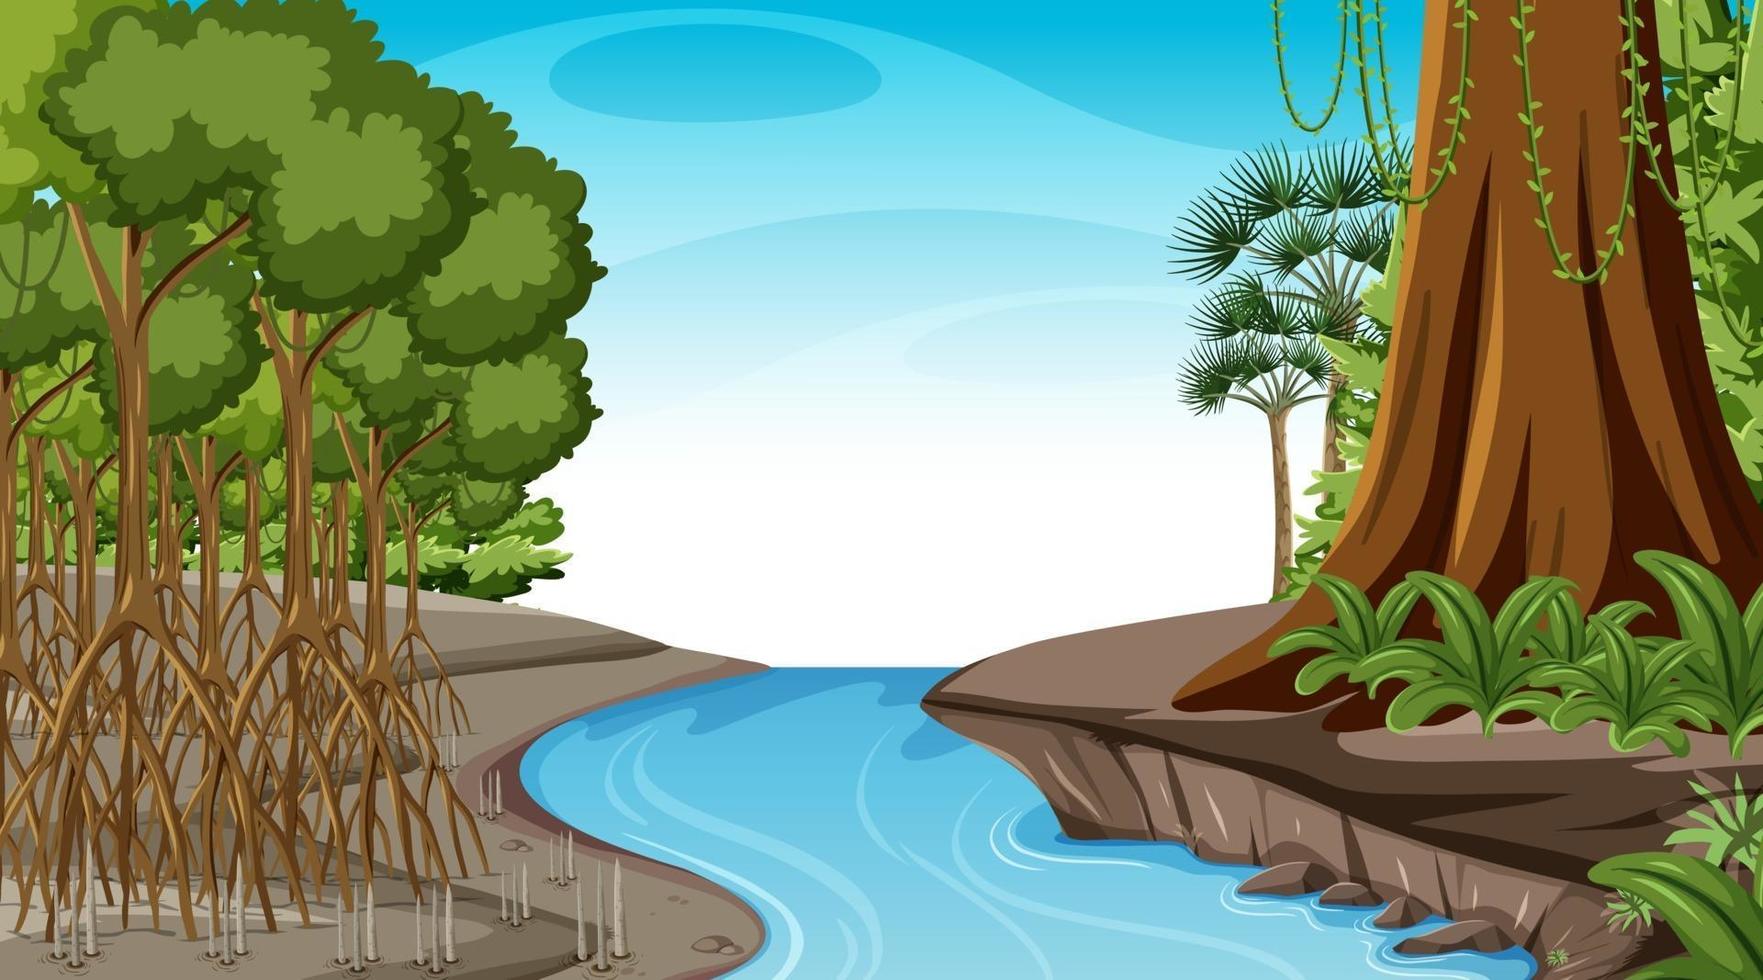 natuurtafereel met mangrovebos overdag in cartoonstijl vector